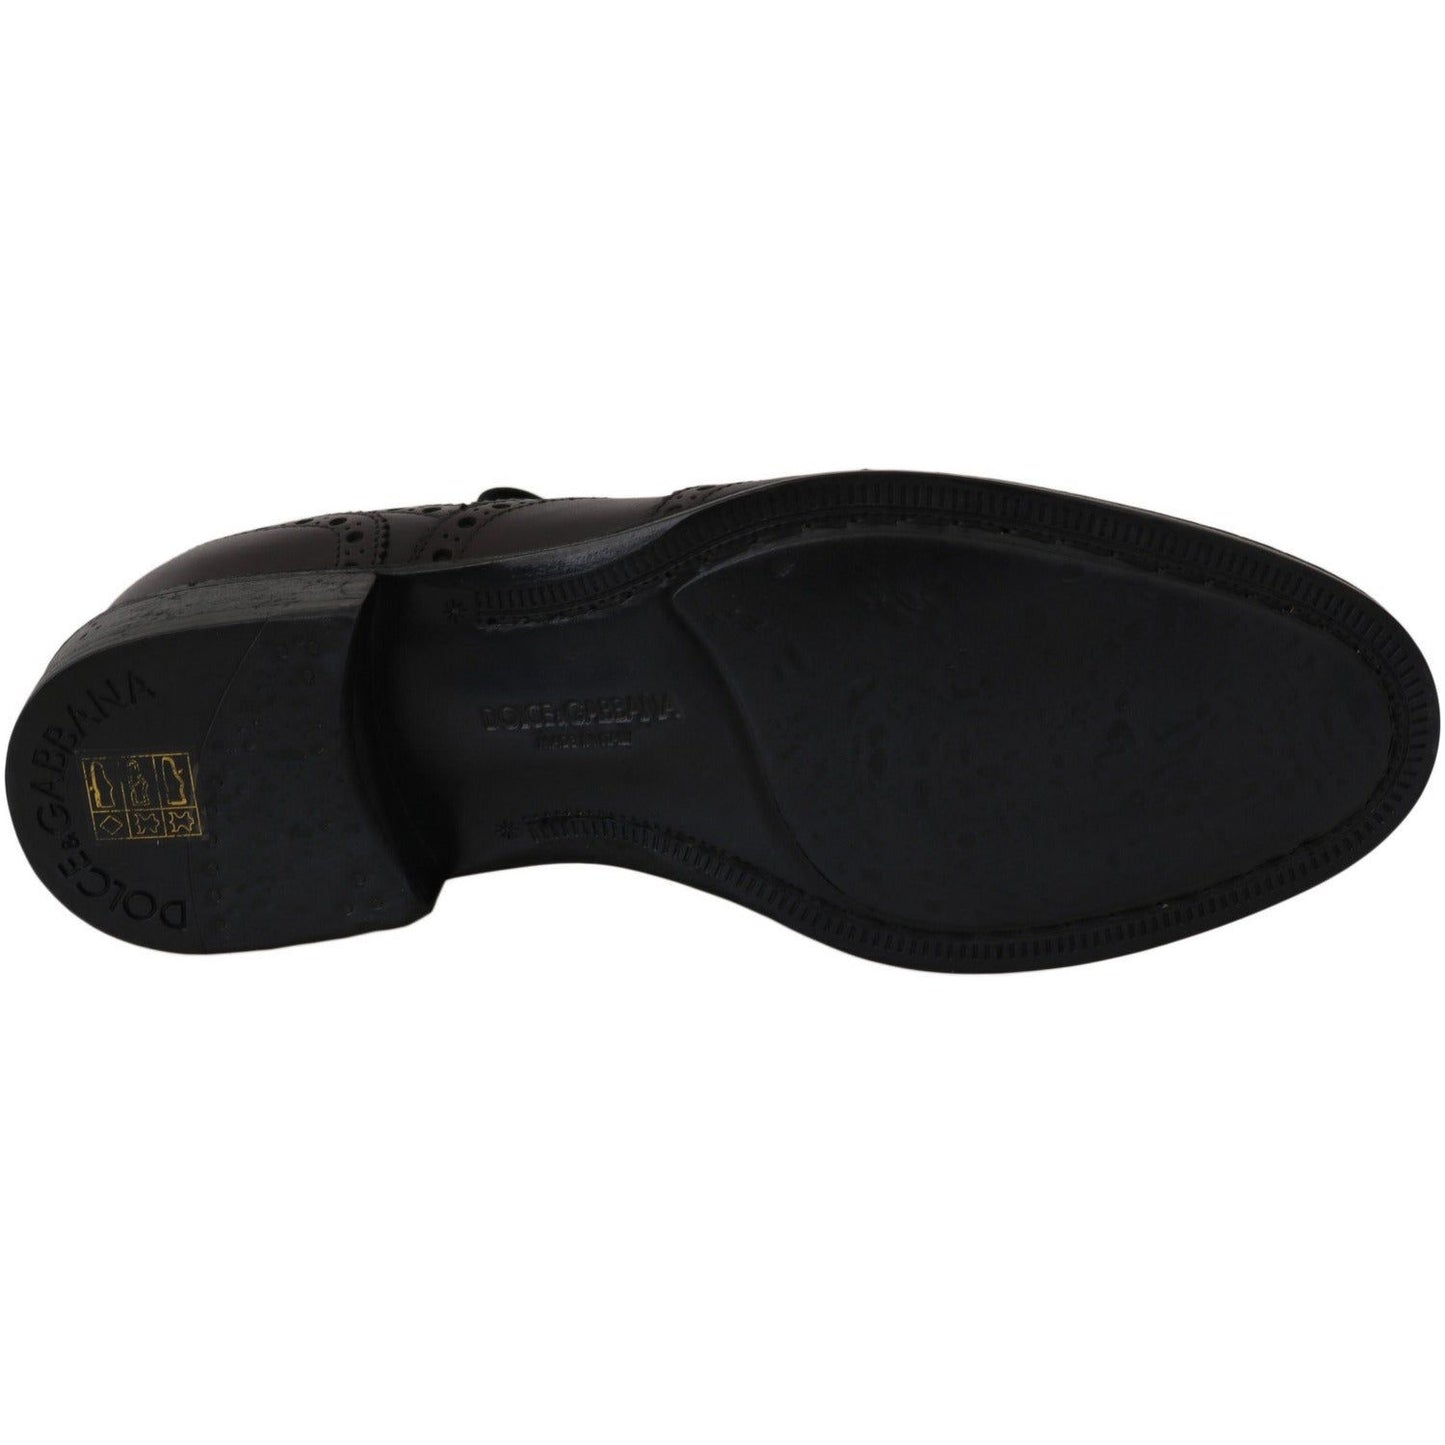 Dolce & Gabbana Elegant Bordeaux Wingtip Derby Dress Shoes black-leather-wingtip-oxford-dress-shoes-1 Dress Shoes IMG_8974-scaled_36803f5c-3622-46db-942c-2c1d40f9220d.jpg